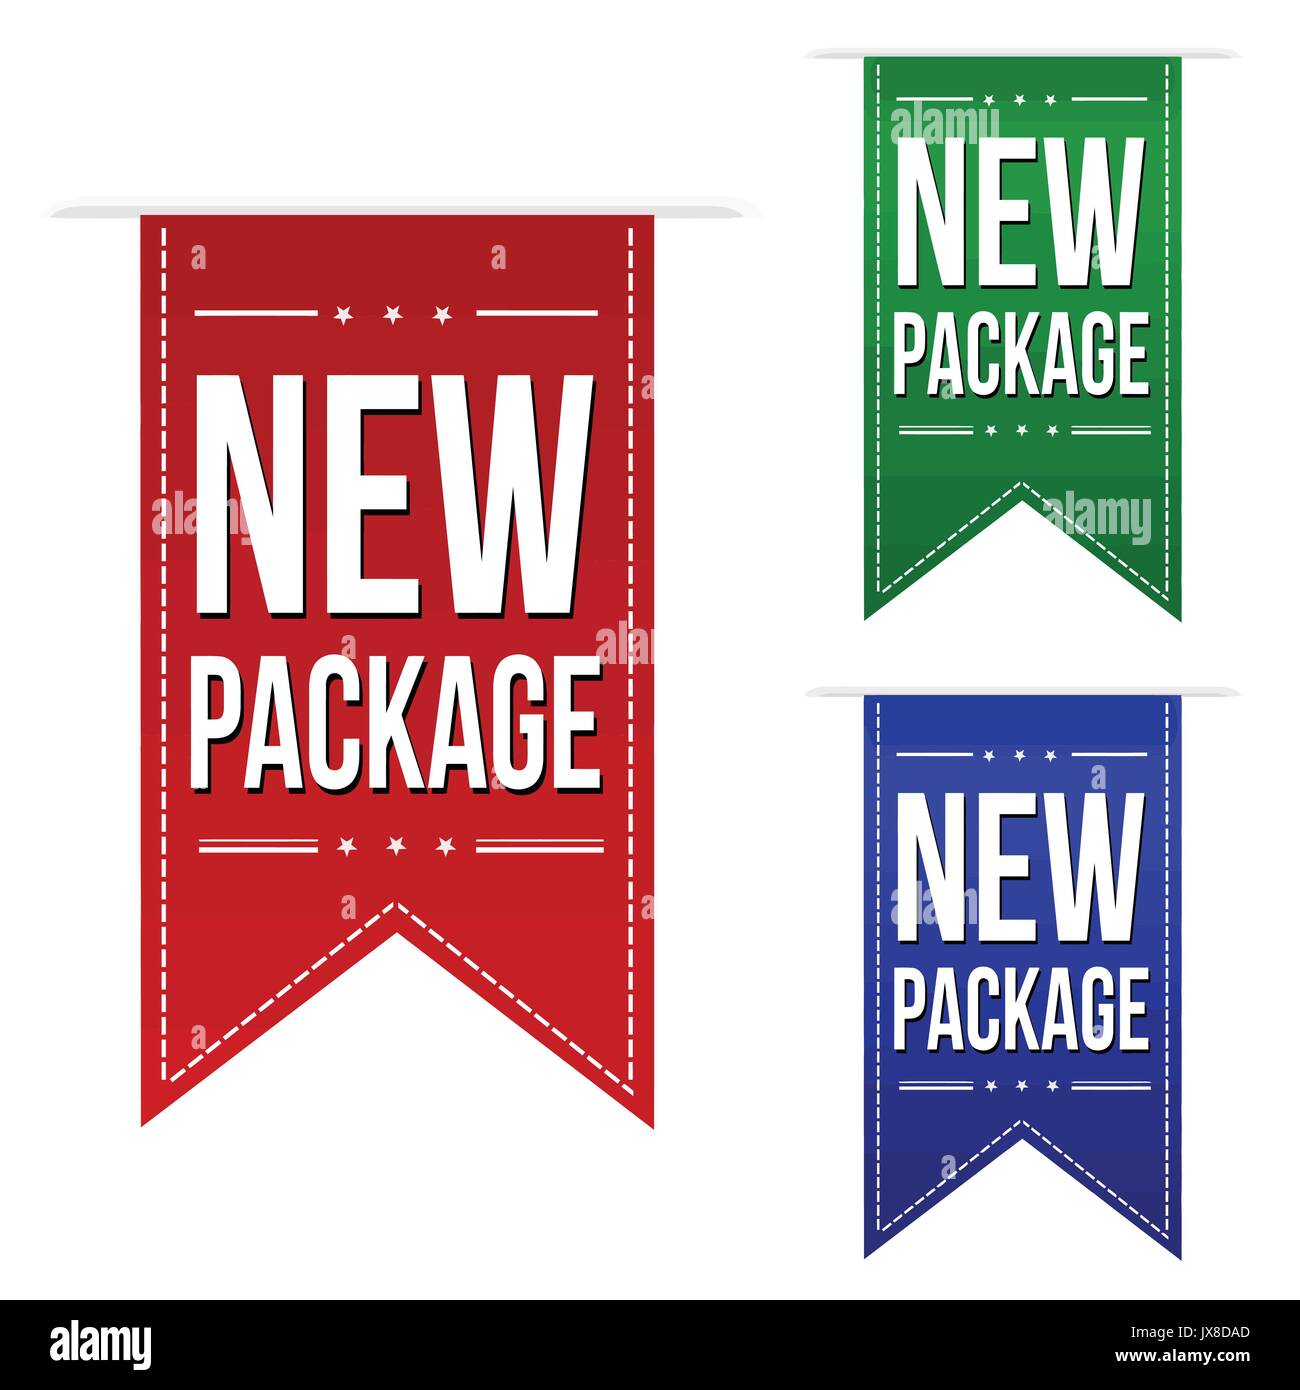 New package banner design set over a white background, vector illustration Stock Vector